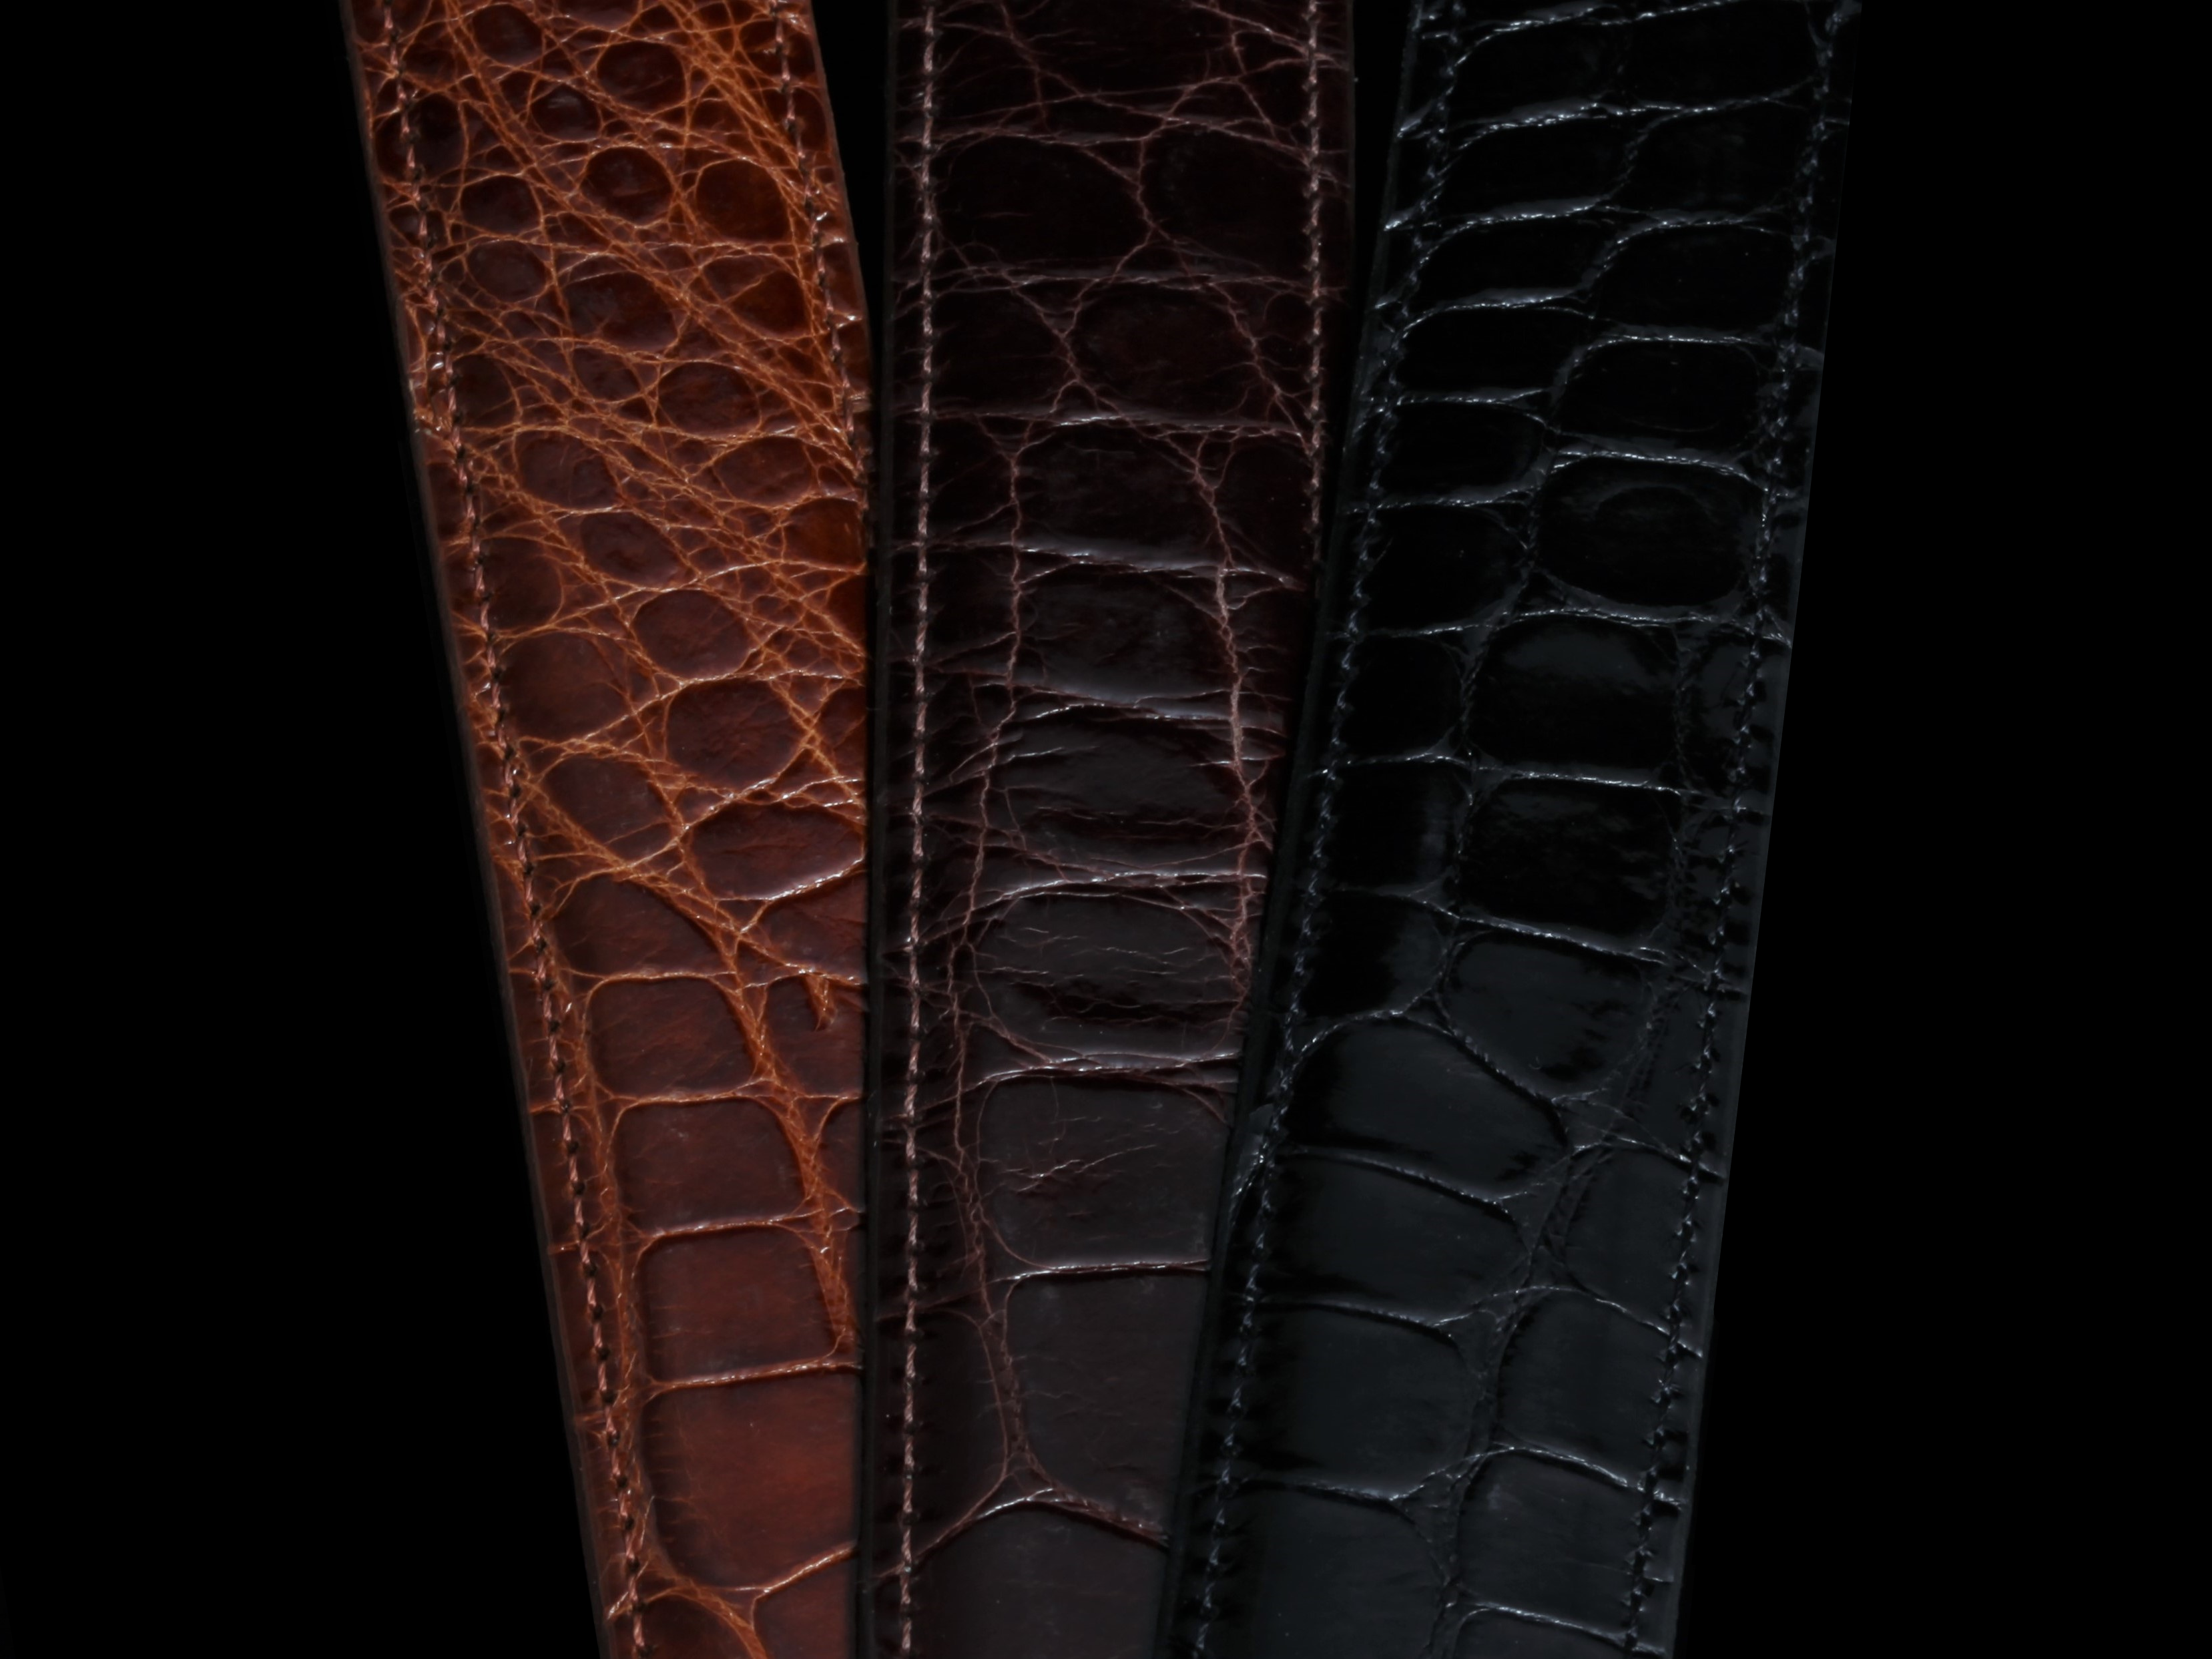 Classic 30mm Genuine Glazed Alligator Belt, 36 / Dark Brown